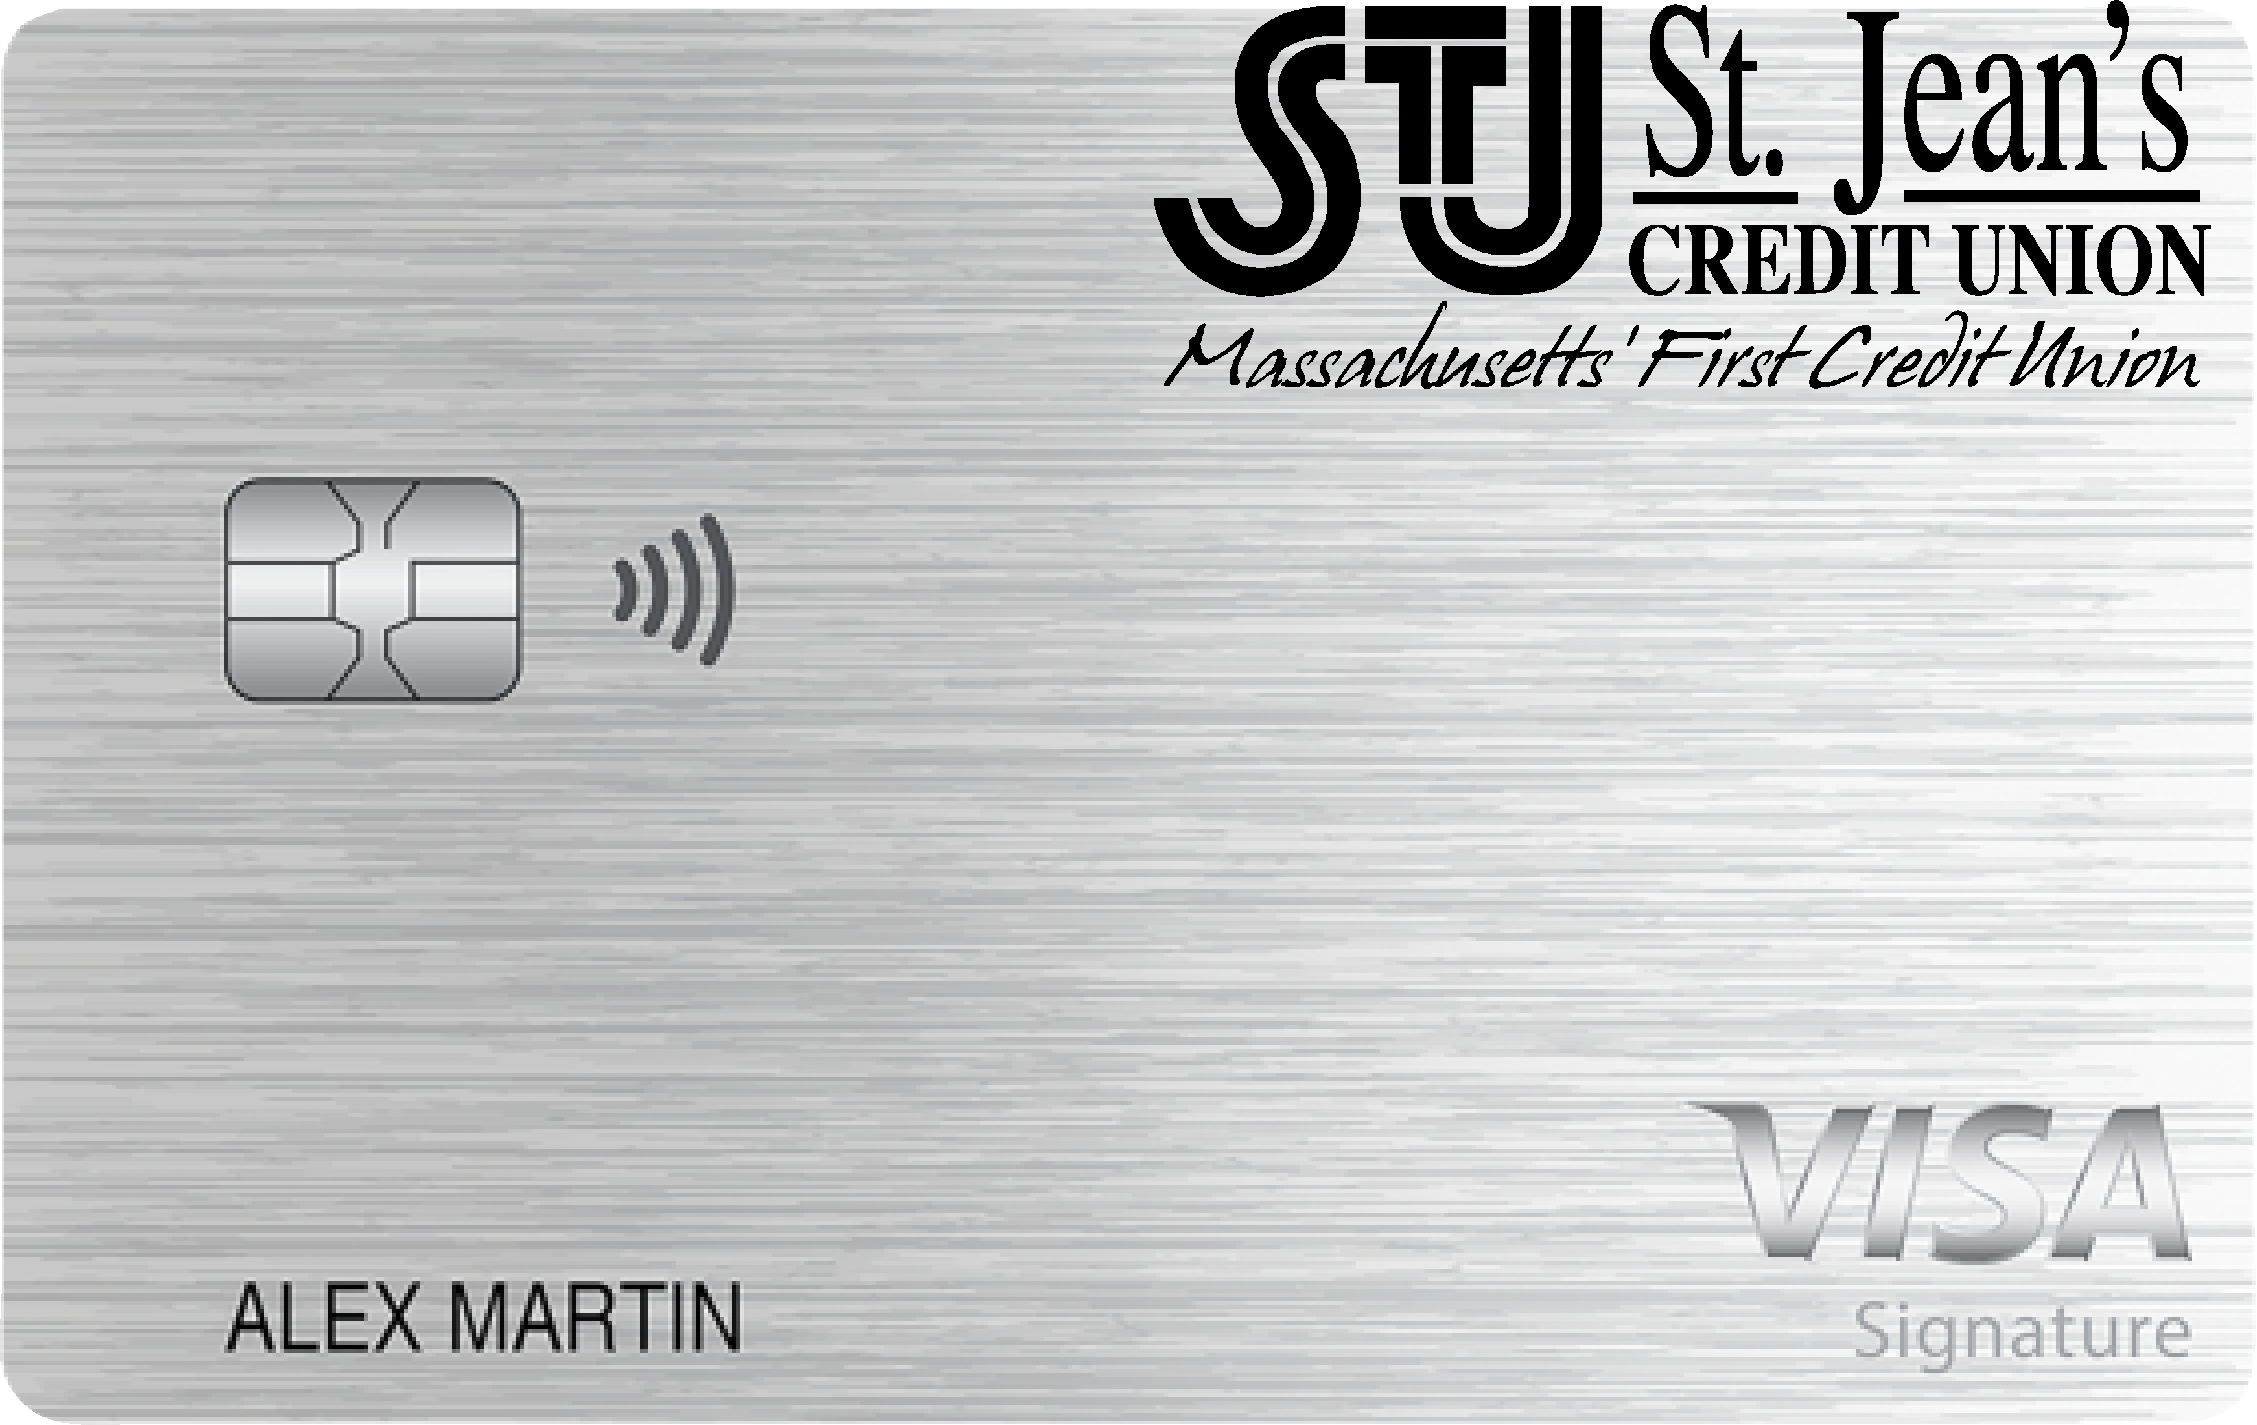 St. Jean's Credit Union Travel Rewards+ Card